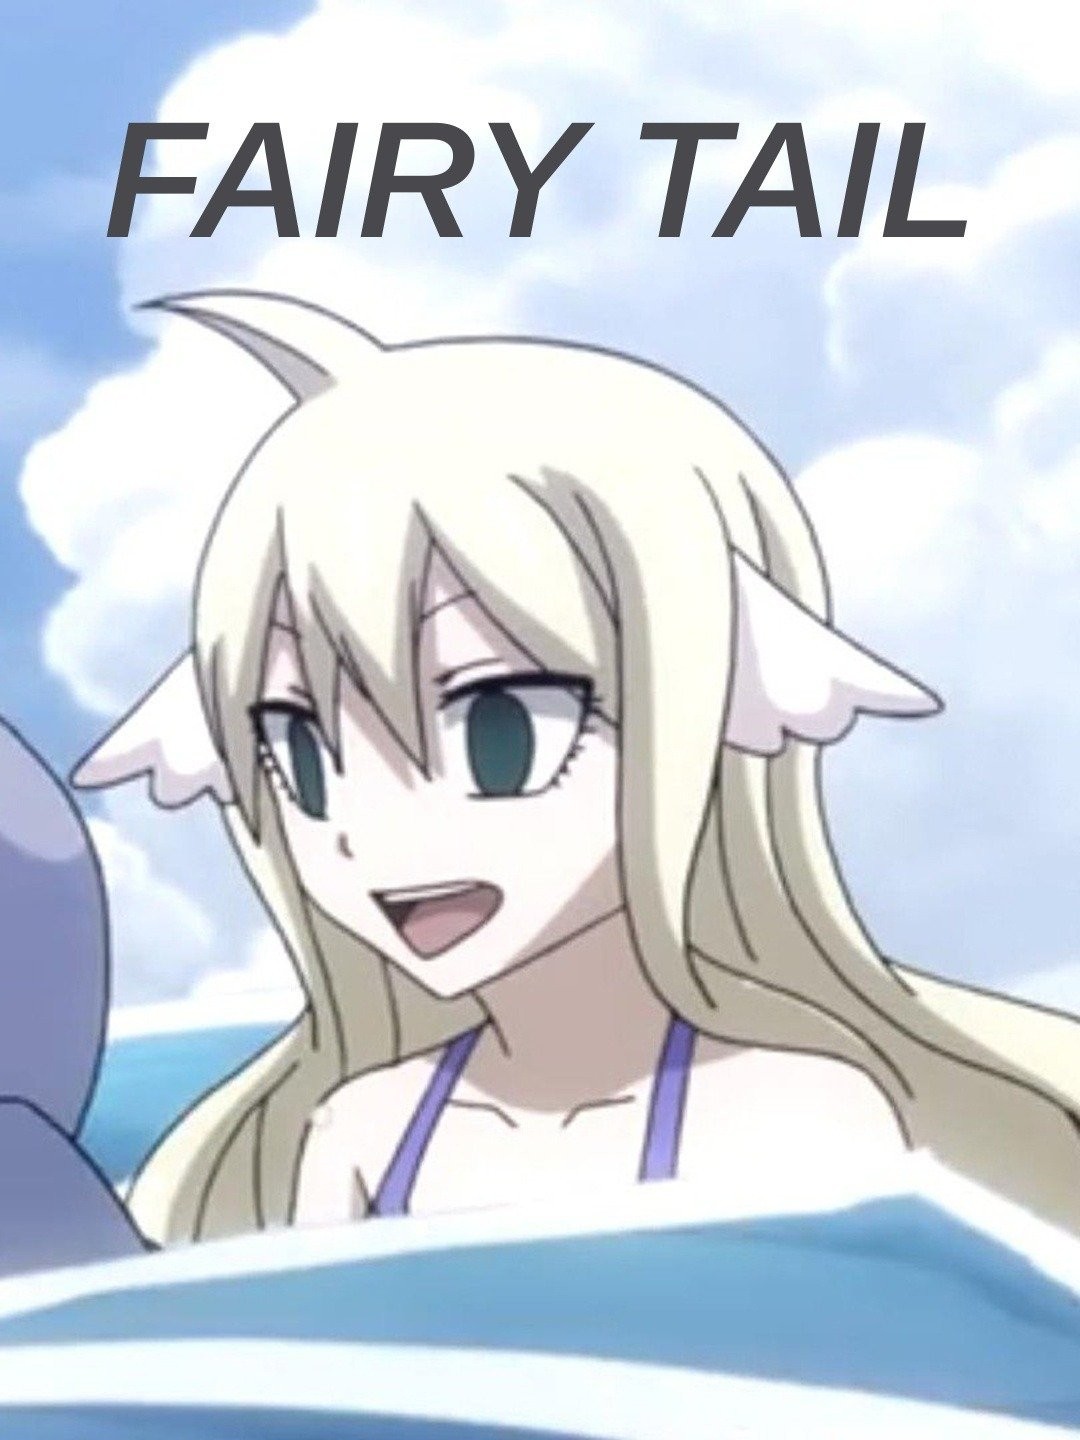 Watch Fairy Tail season 2 episode 4 streaming online